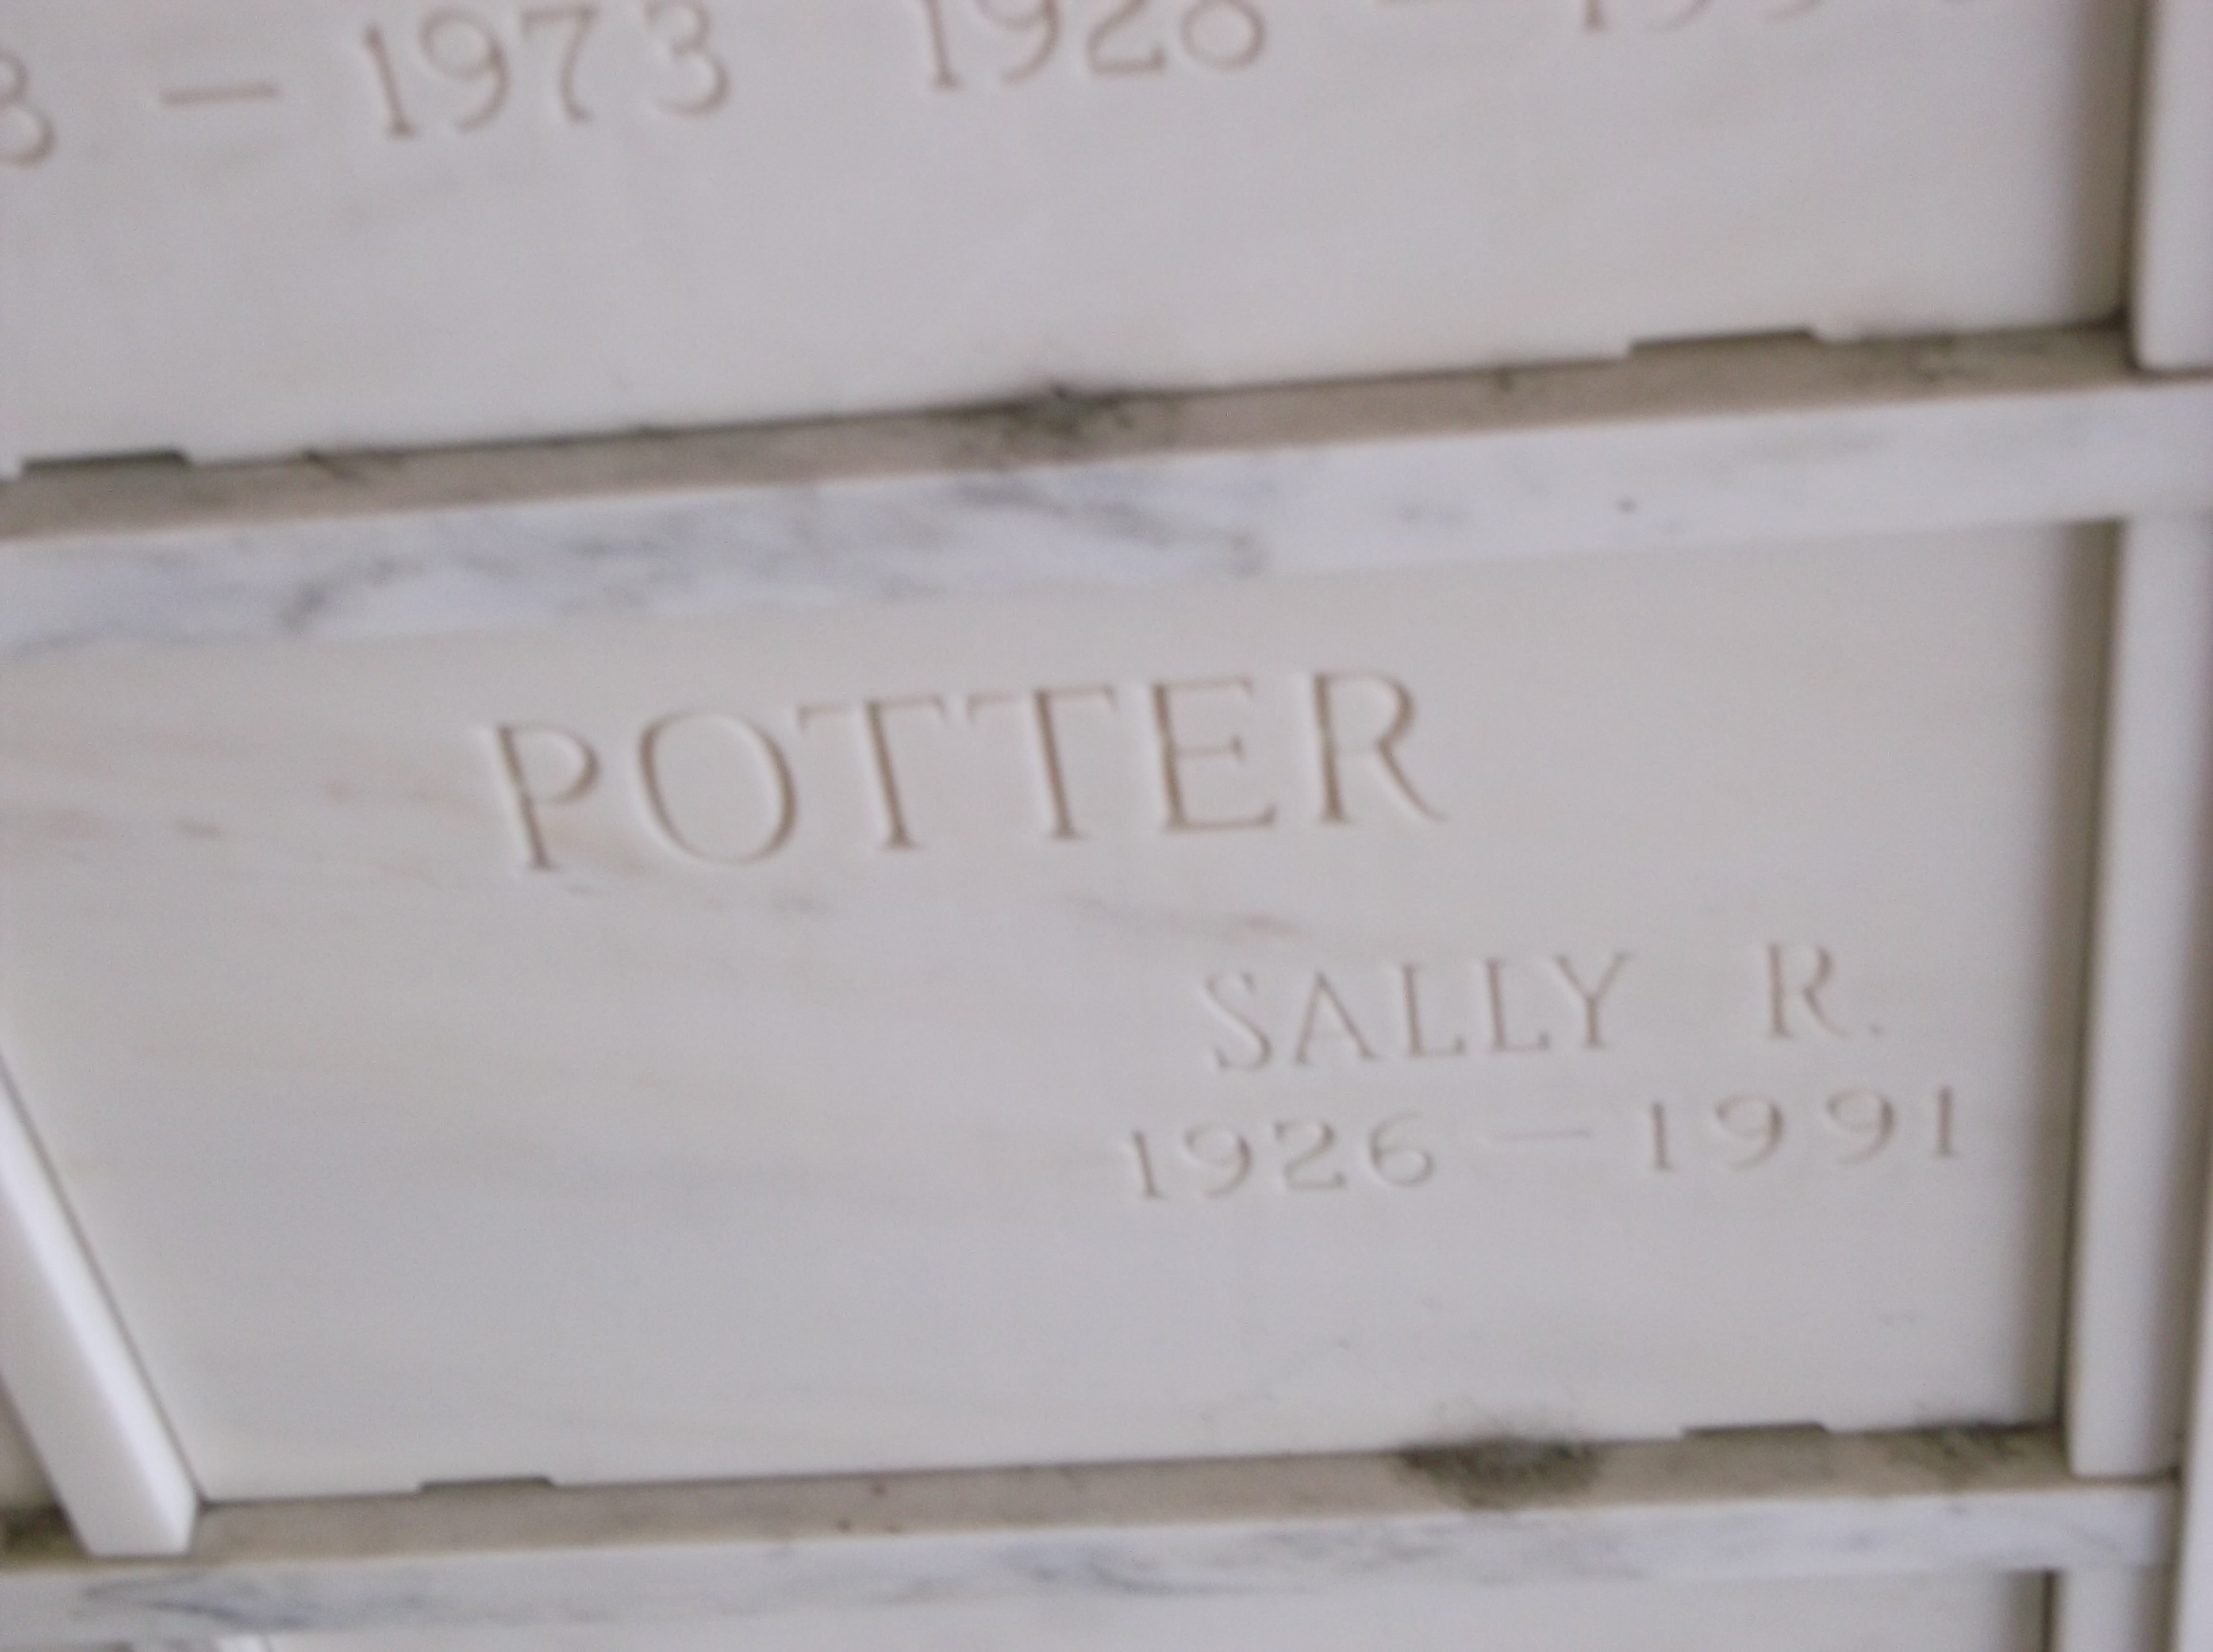 Sally R Potter